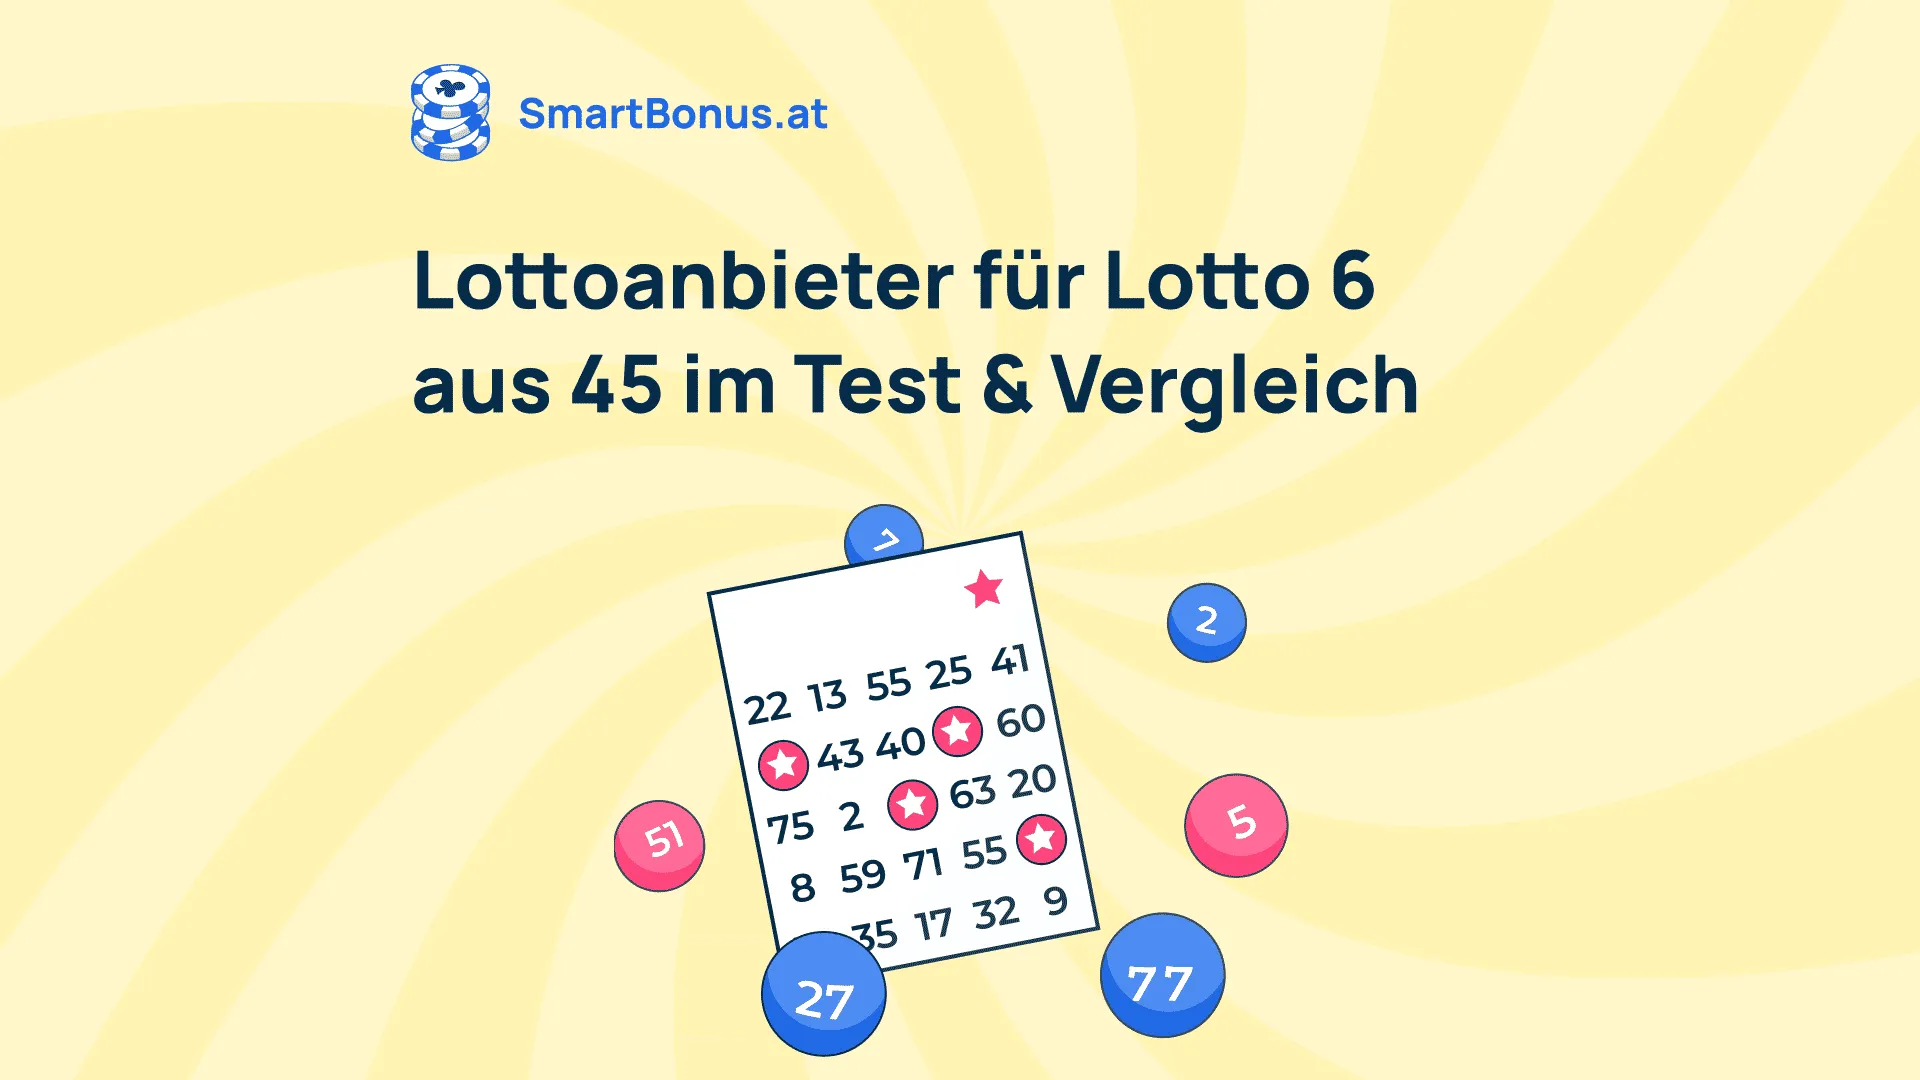 lottoanbieter for lotto 6